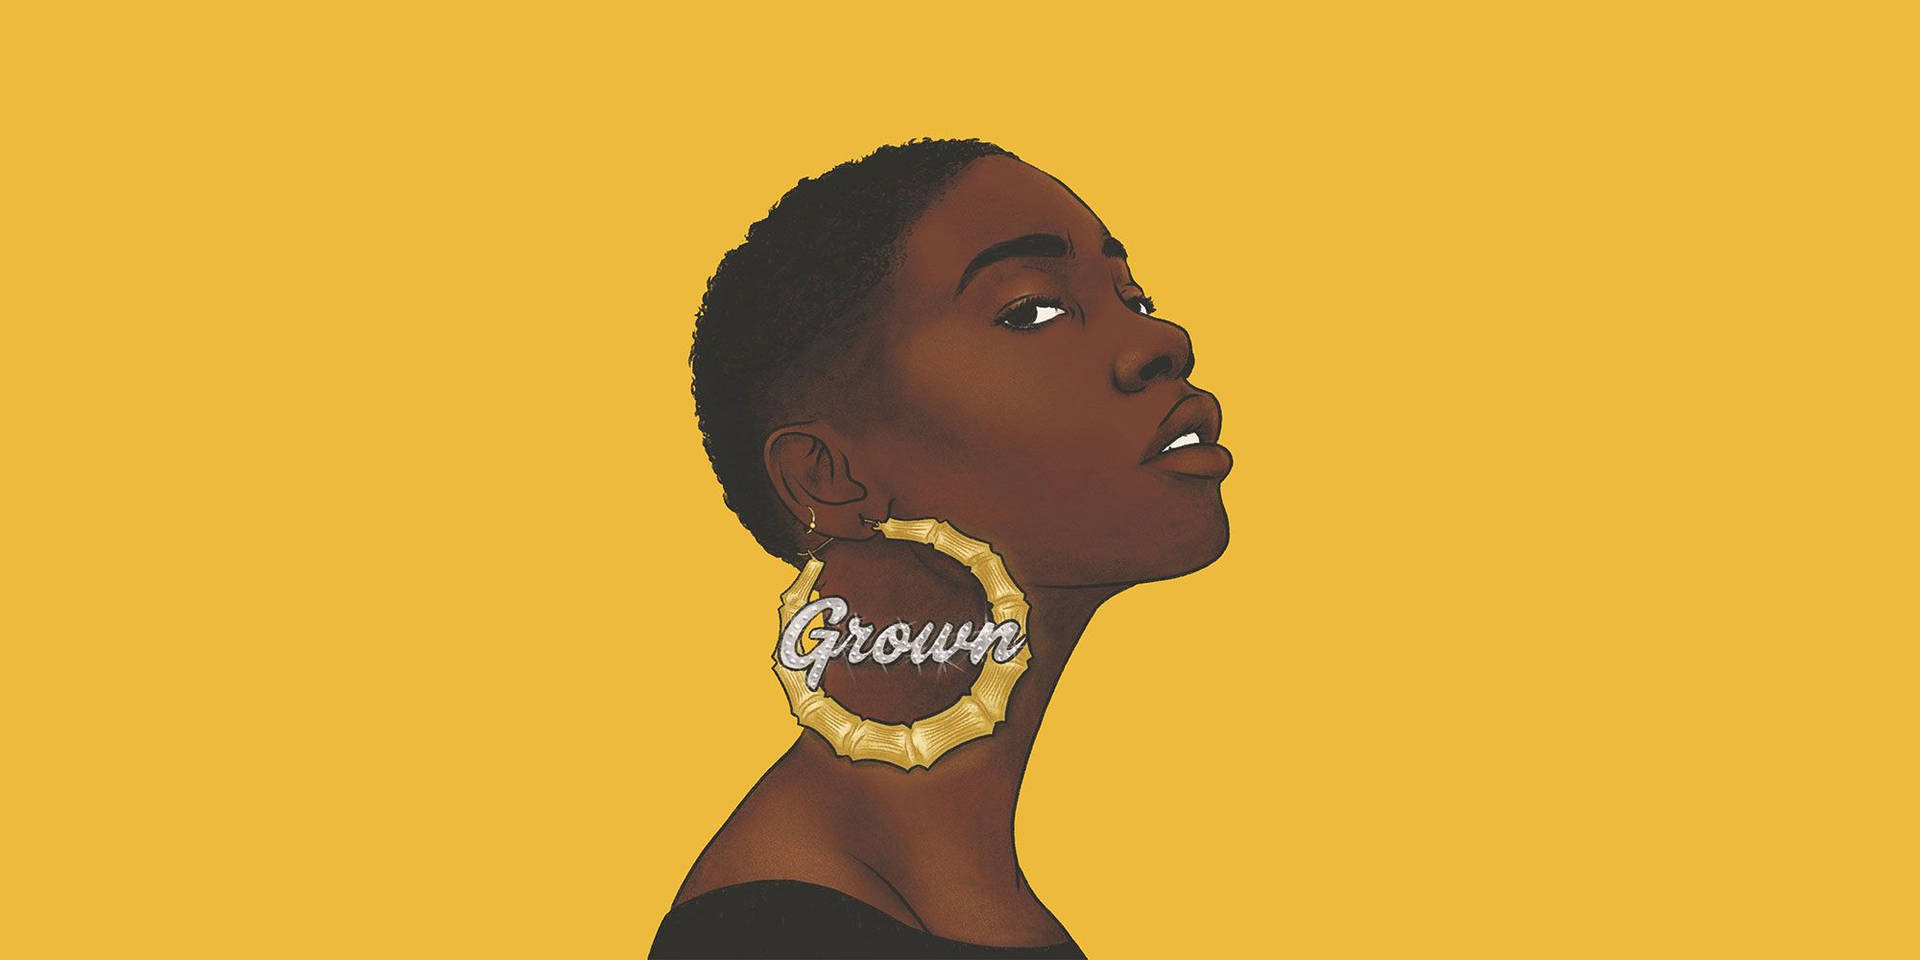 Caption: Radiant Black Girl In Artistic Portrait Background